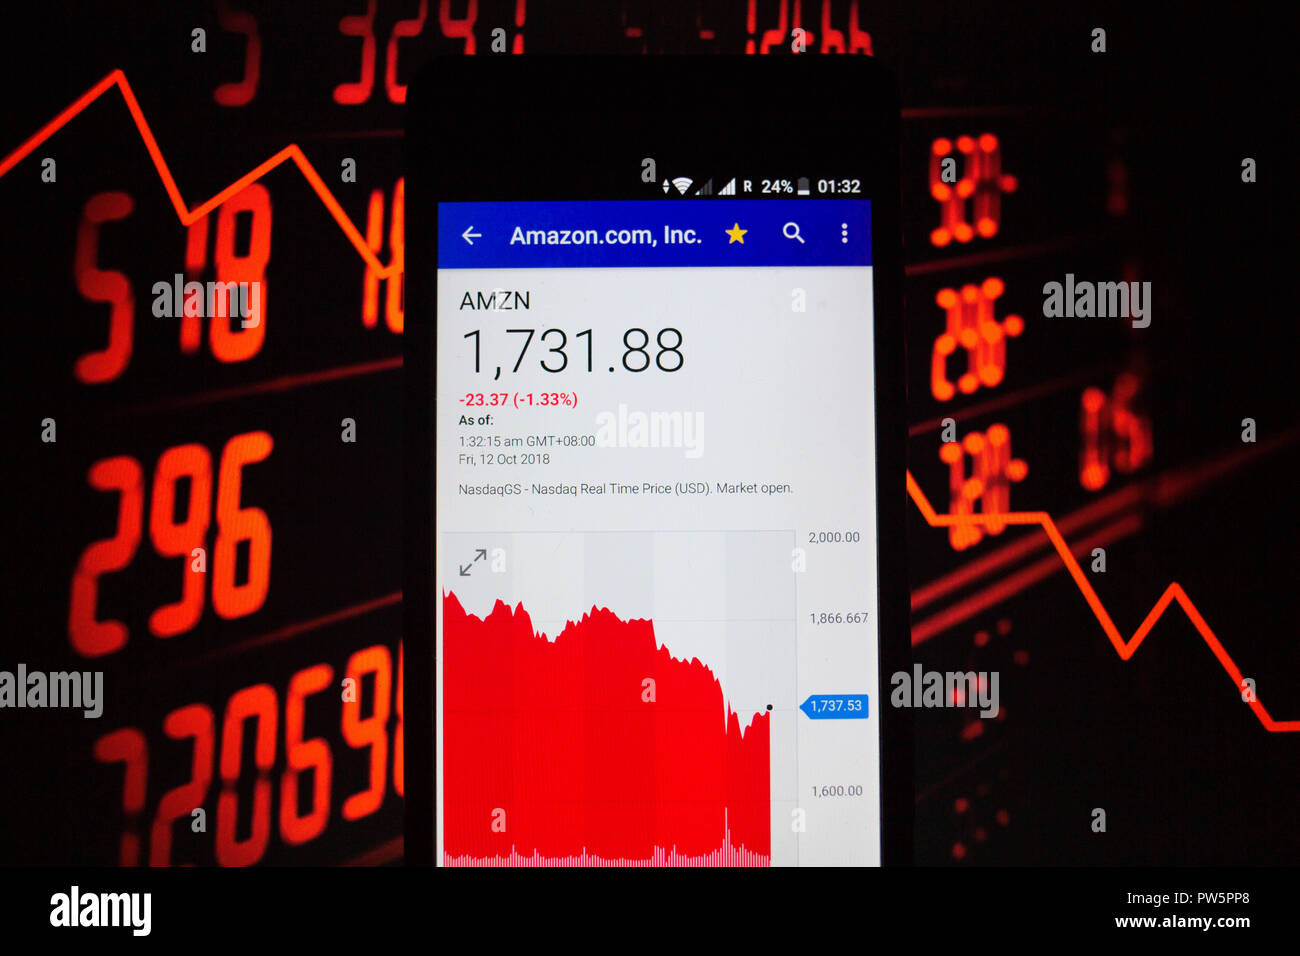 A smartphone displays the Amazon.com, Inc. market value on the stock exchange via the Yahoo Finance app. Stock Photo